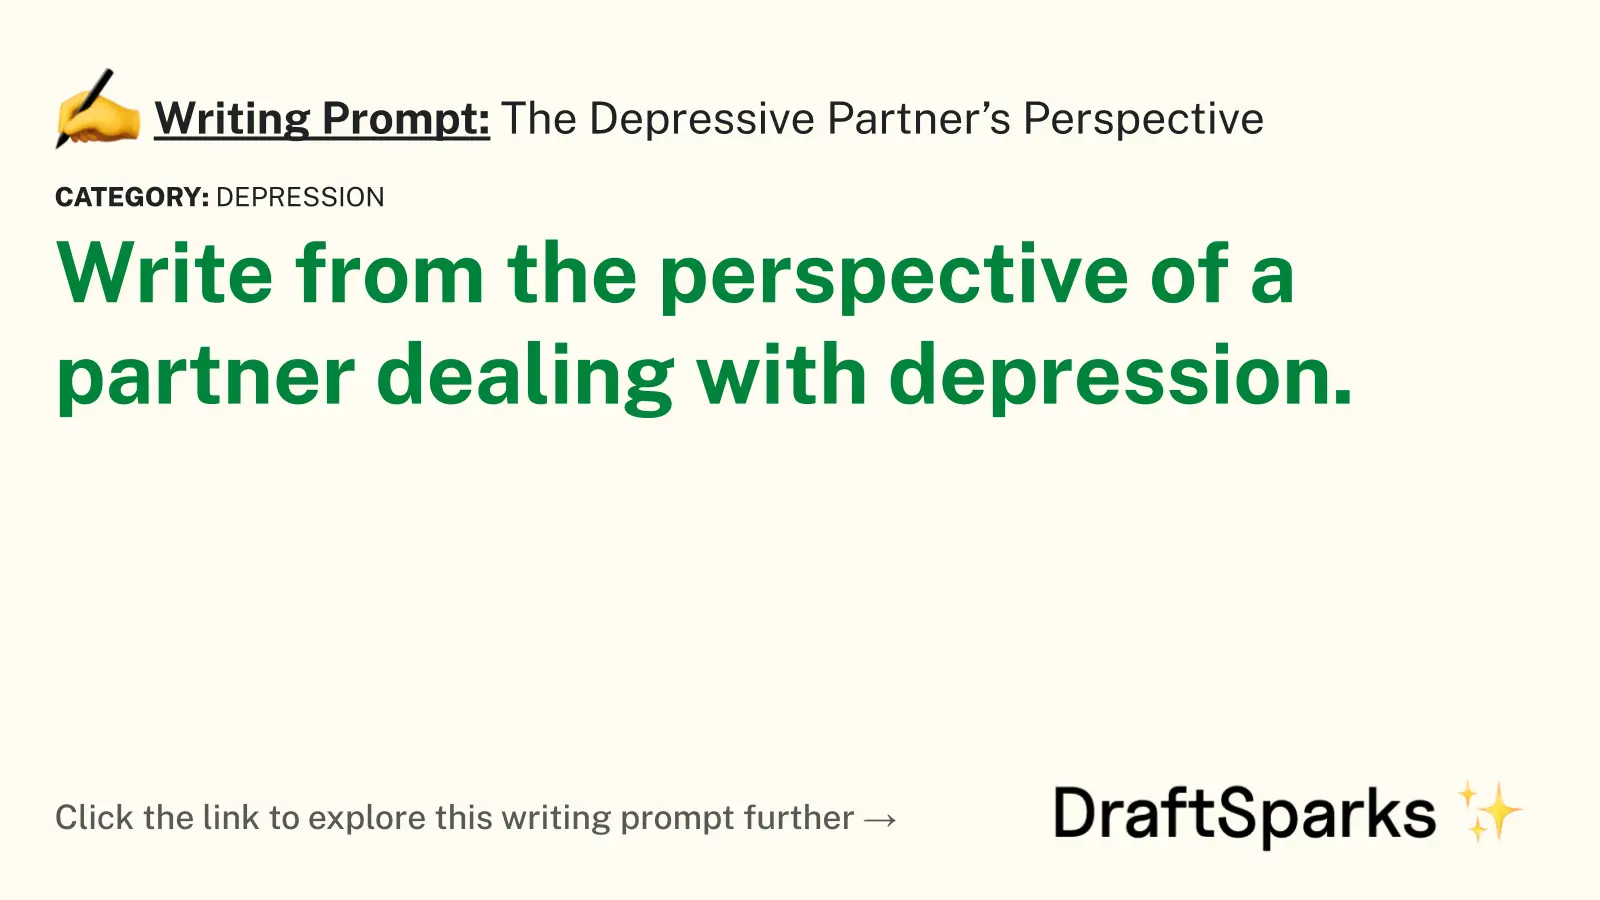 The Depressive Partner’s Perspective